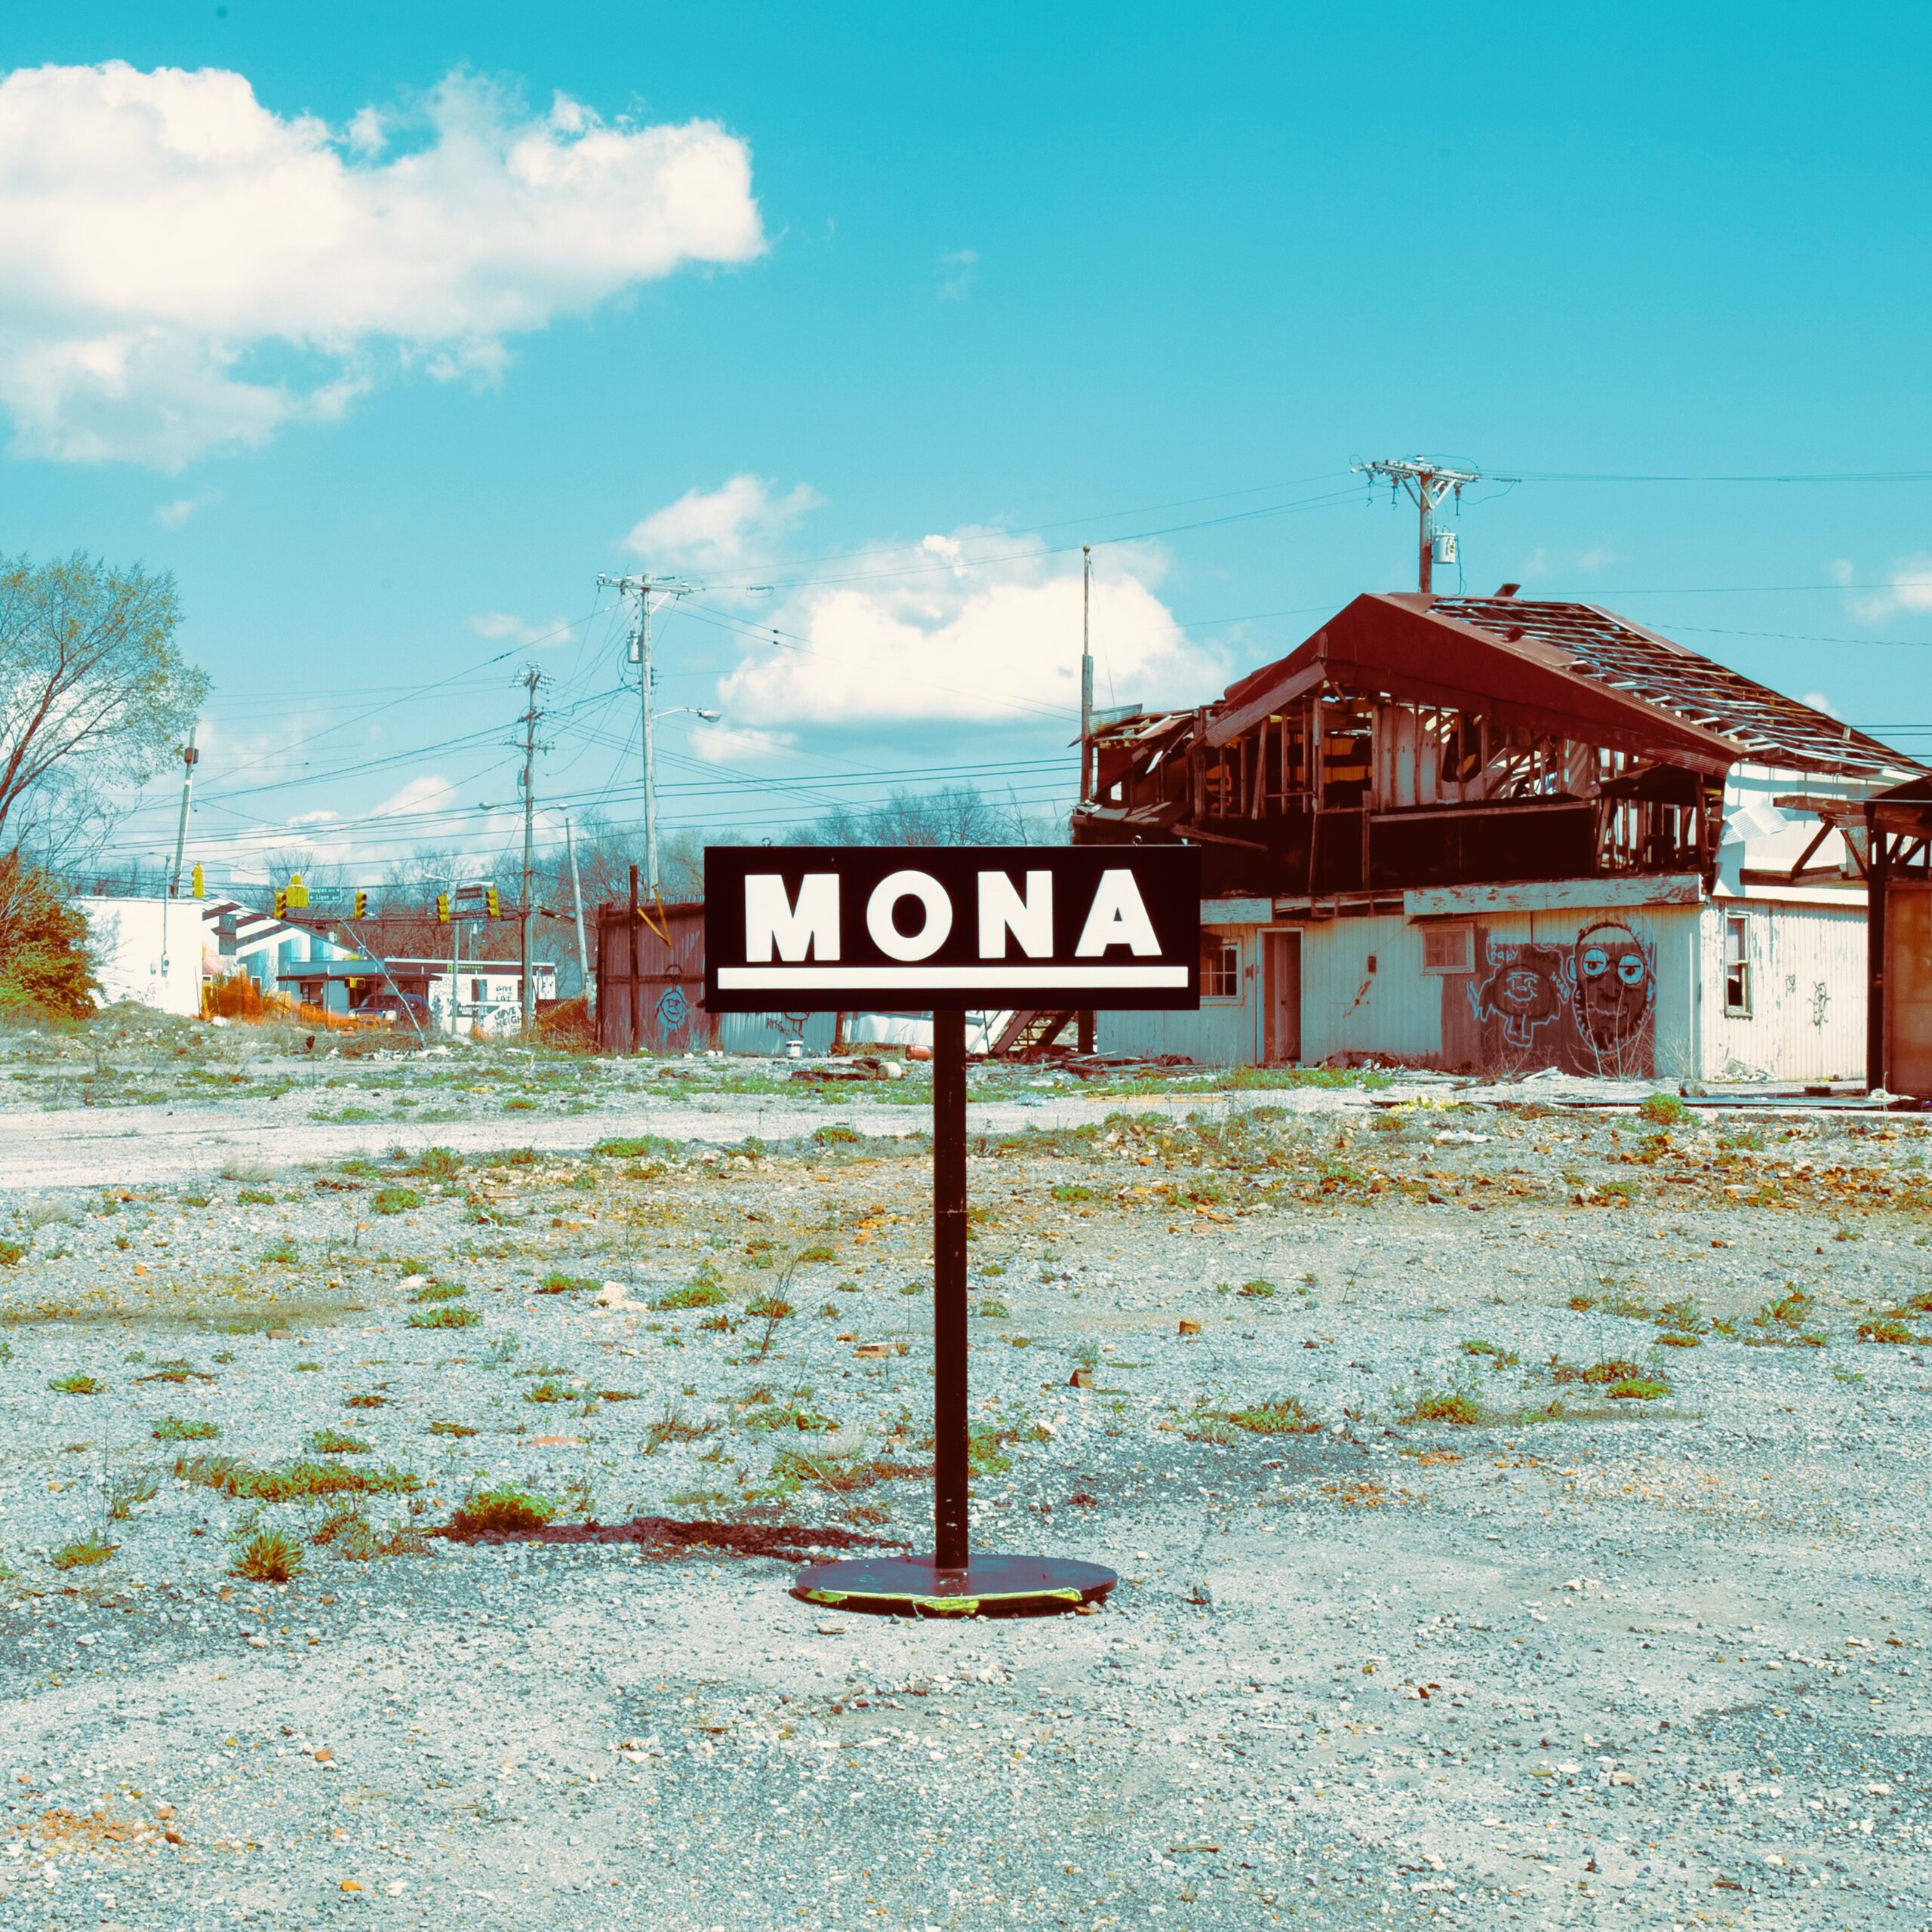 MONA’s “Told Ya”: A Soulful Exploration of Life’s Rhythms